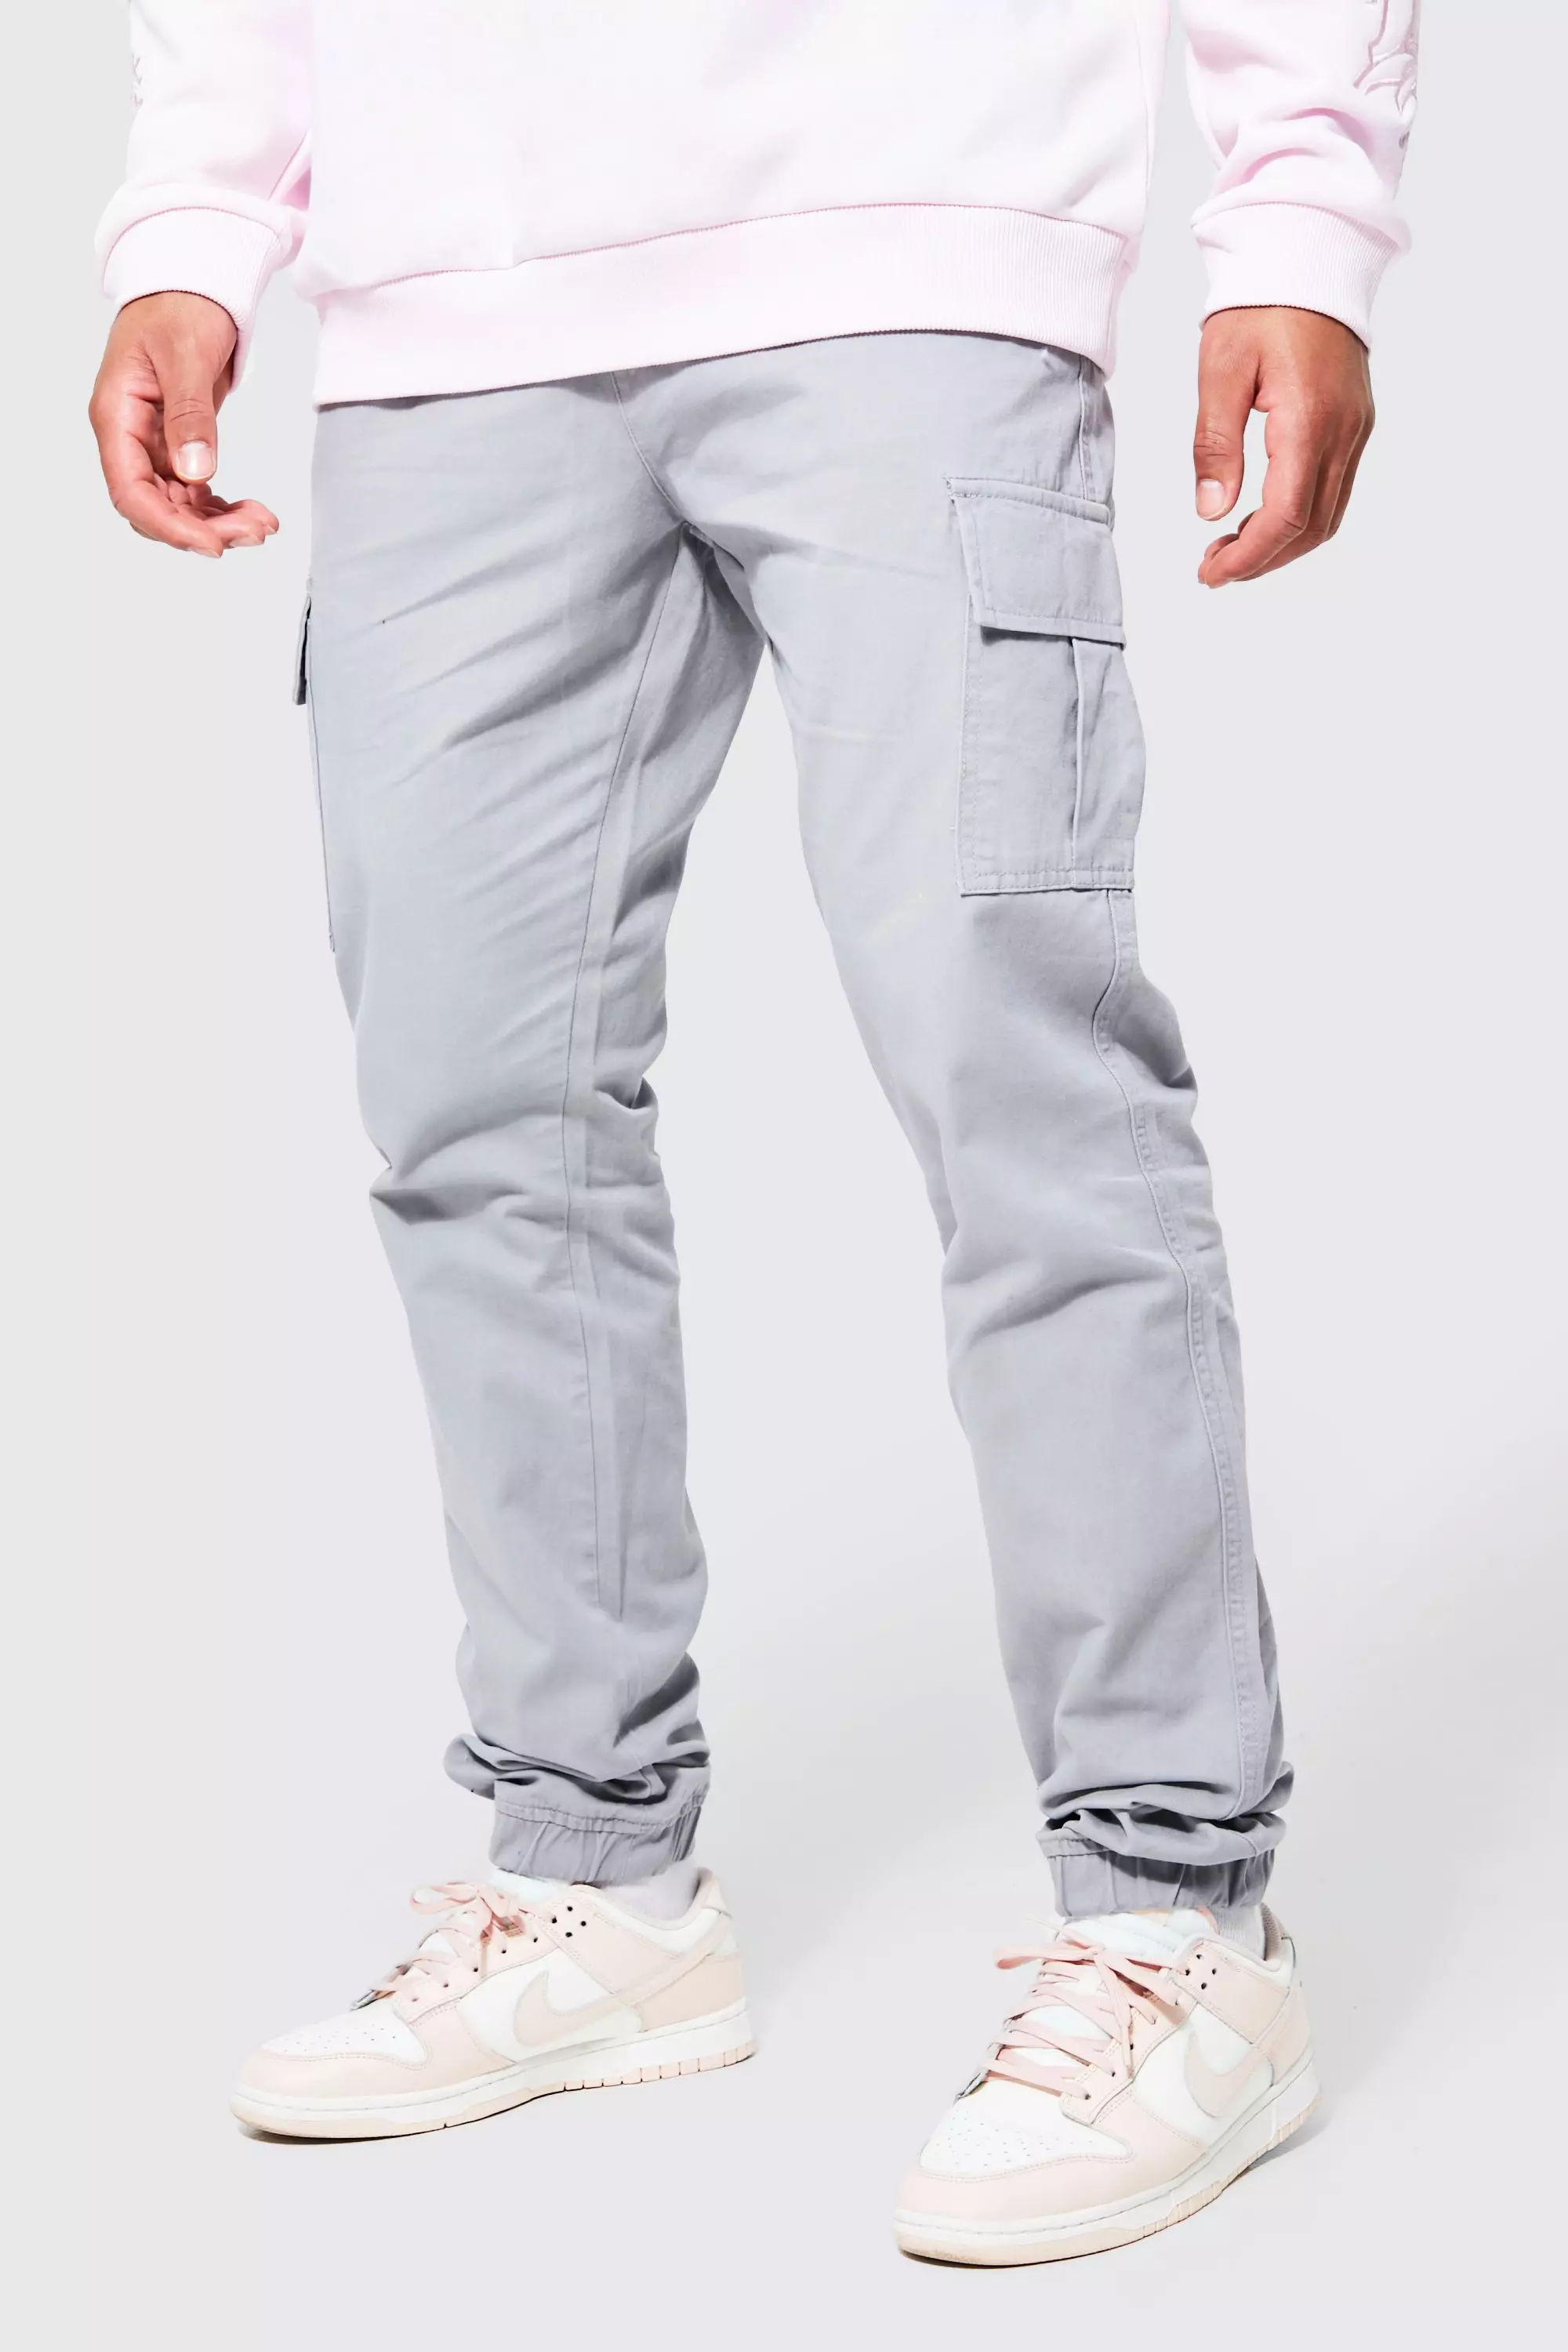 Grey Tall Slim Fit Cargo Pants